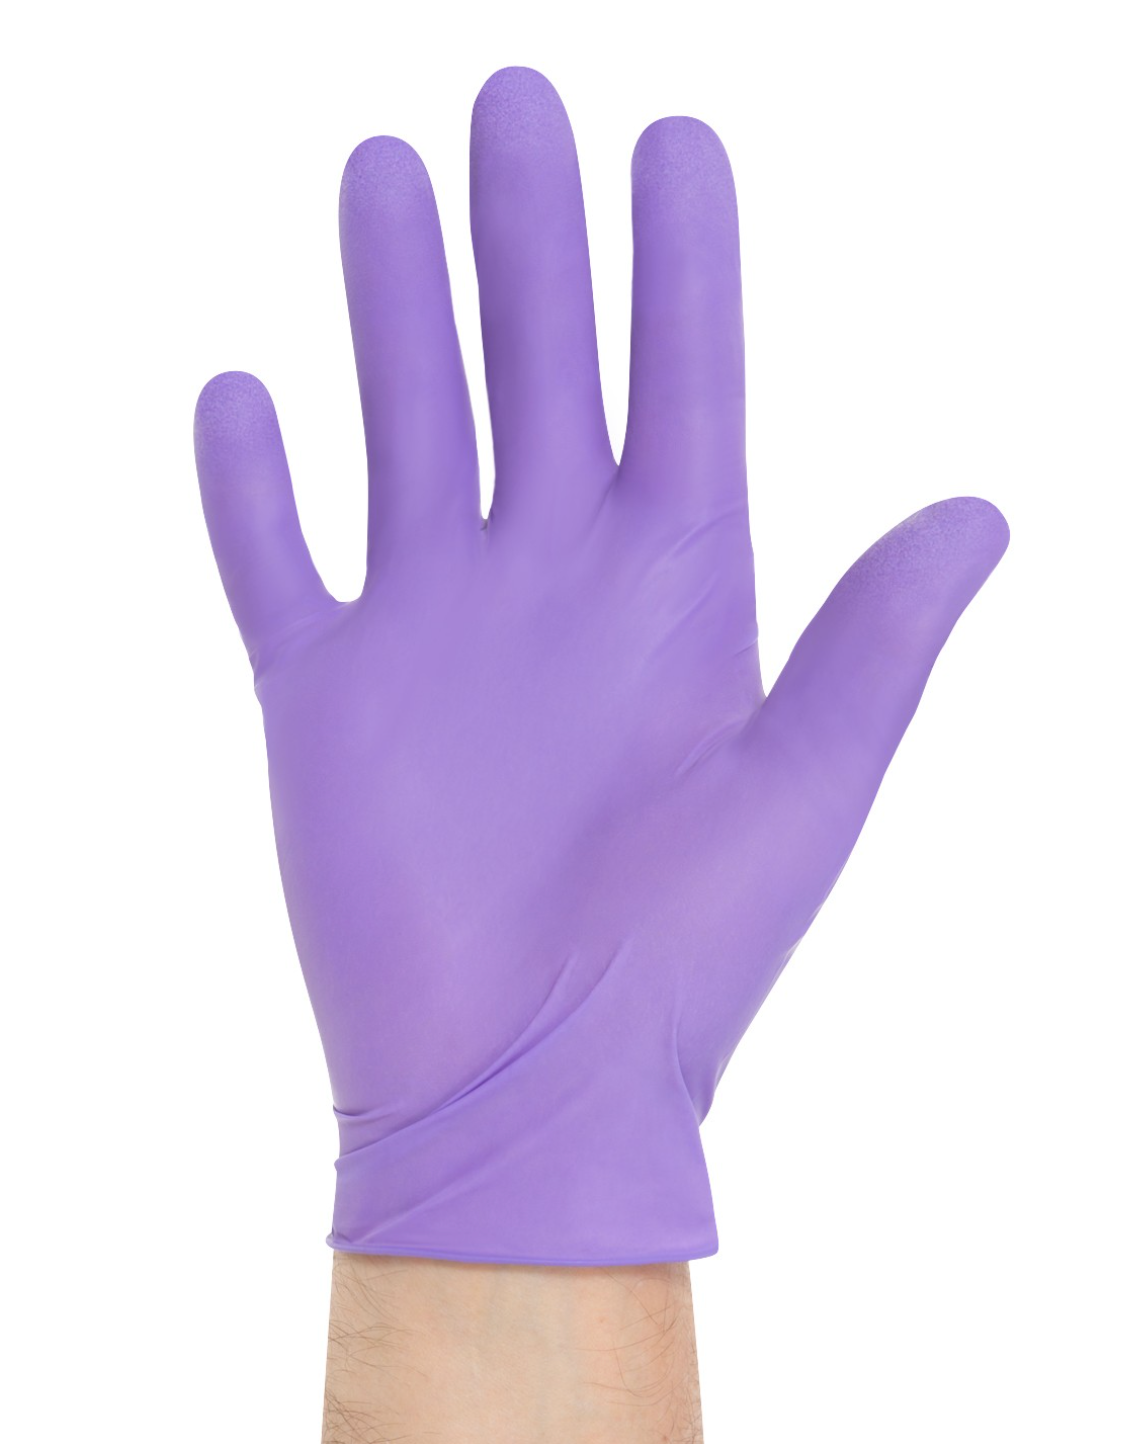 PURPLE Nitrile Gloves, Large, Box of 100